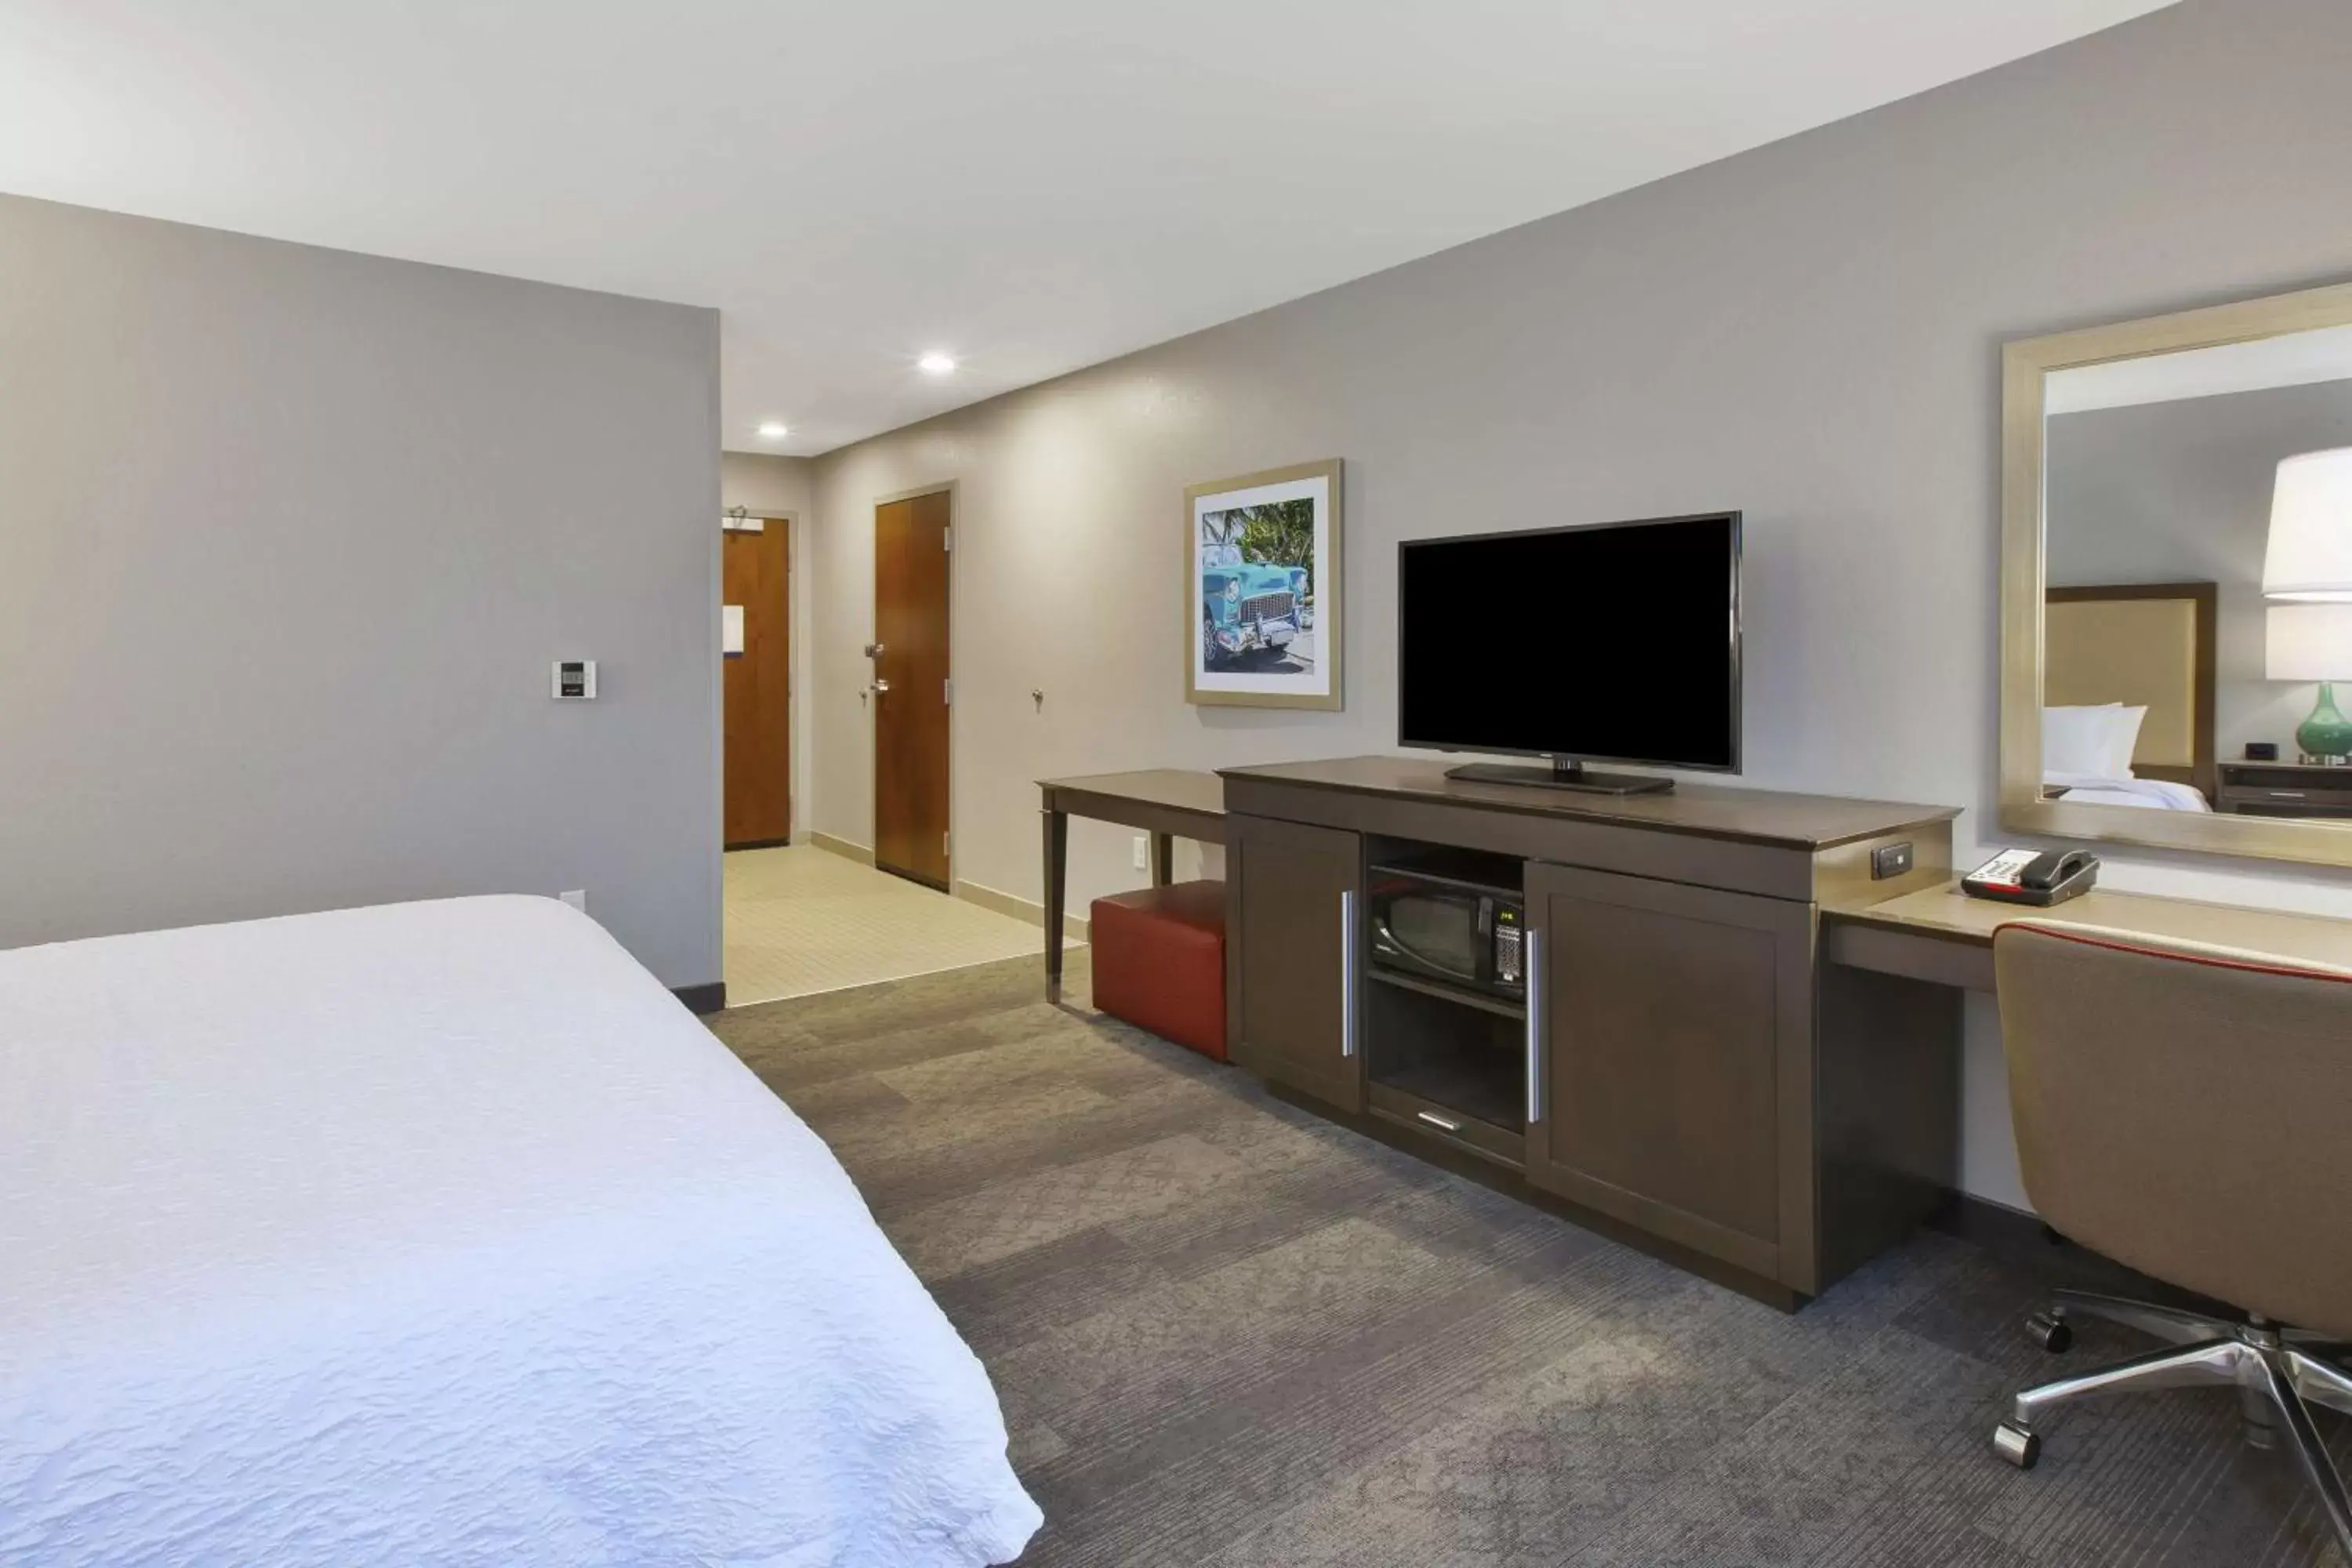 Bedroom, TV/Entertainment Center in Hampton Inn by Hilton Detroit Dearborn, MI